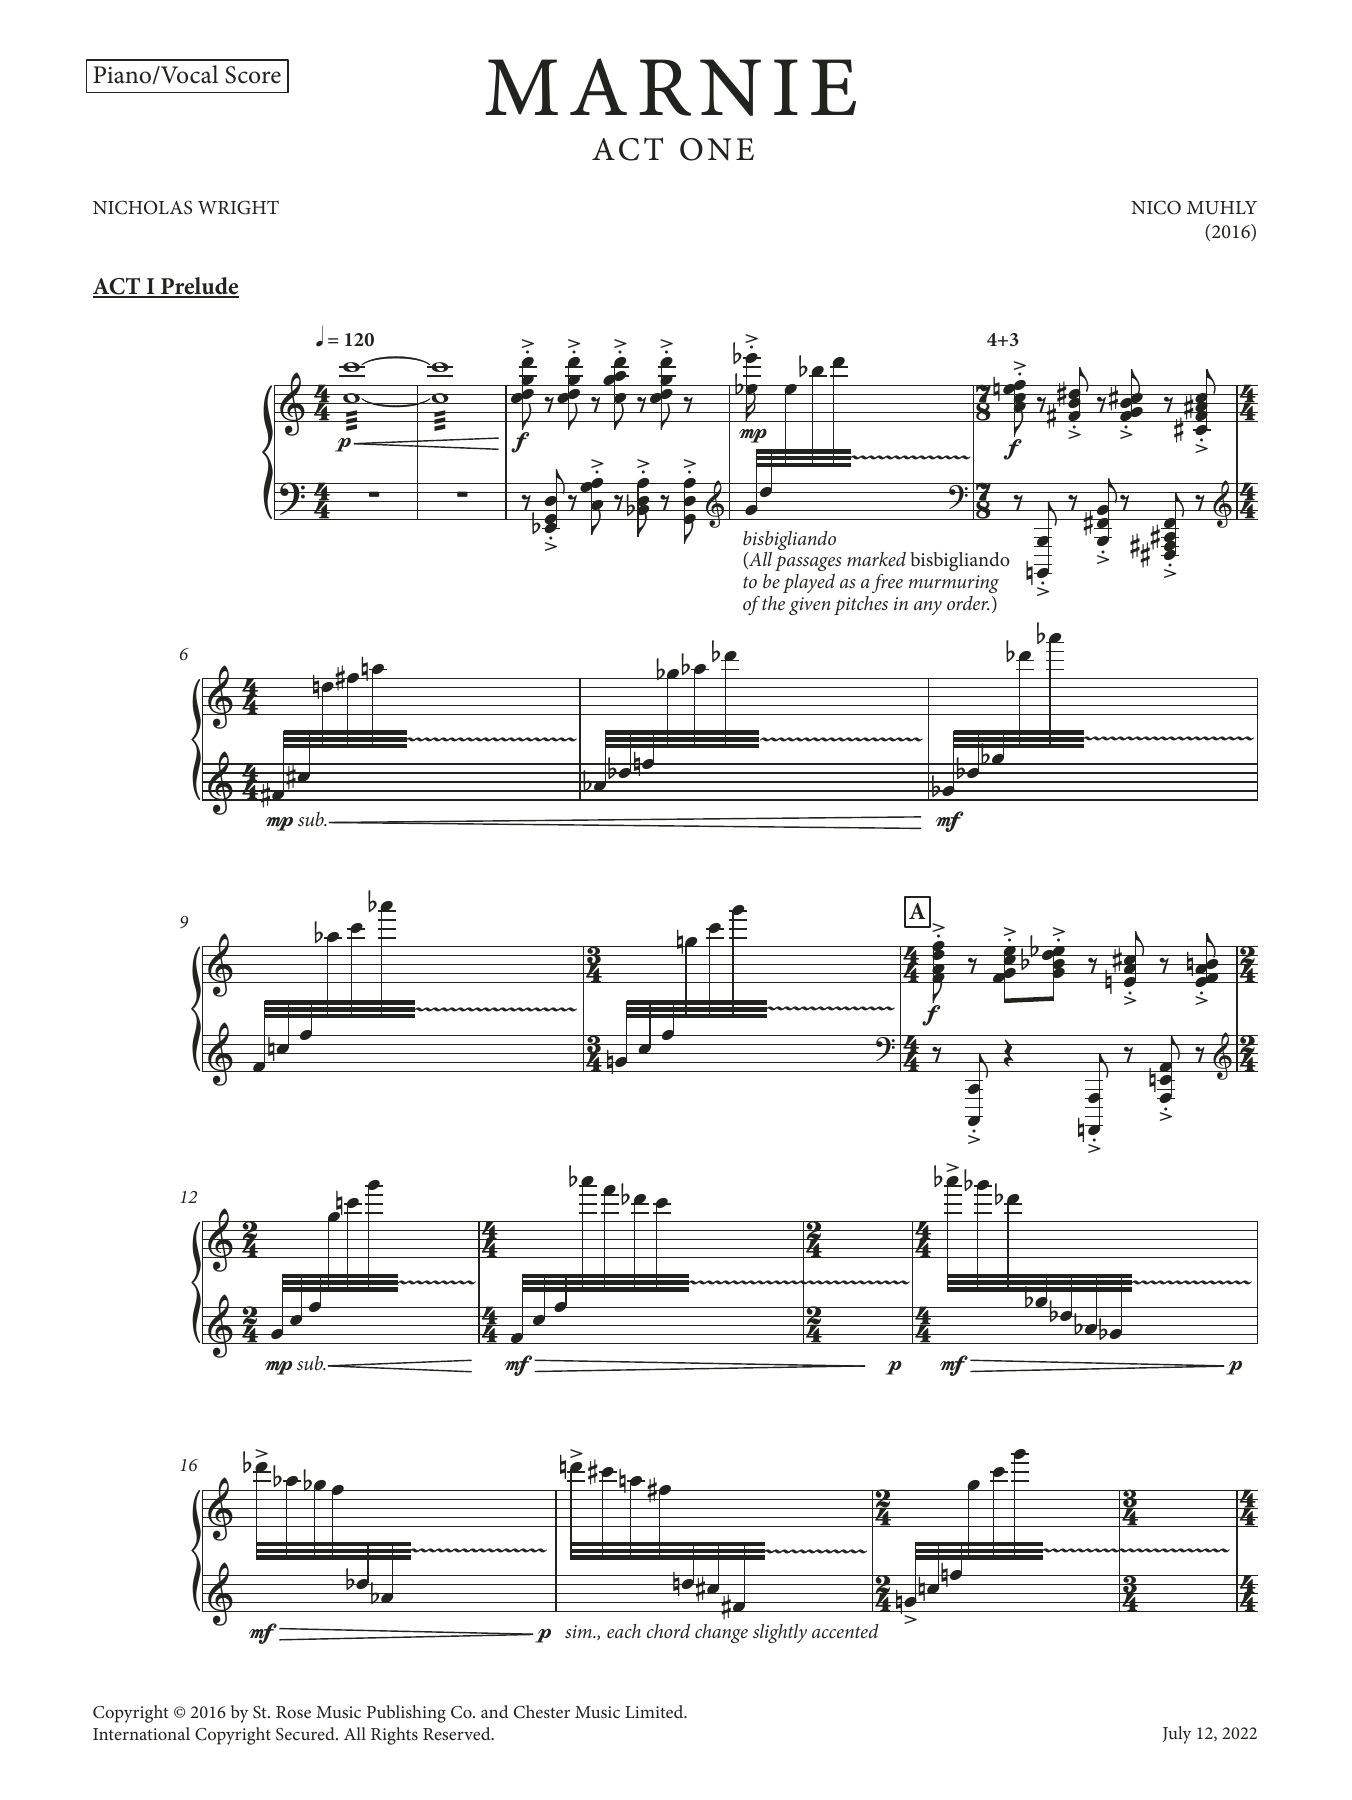 Nico Muhly Marnie (Vocal Score) sheet music notes printable PDF score